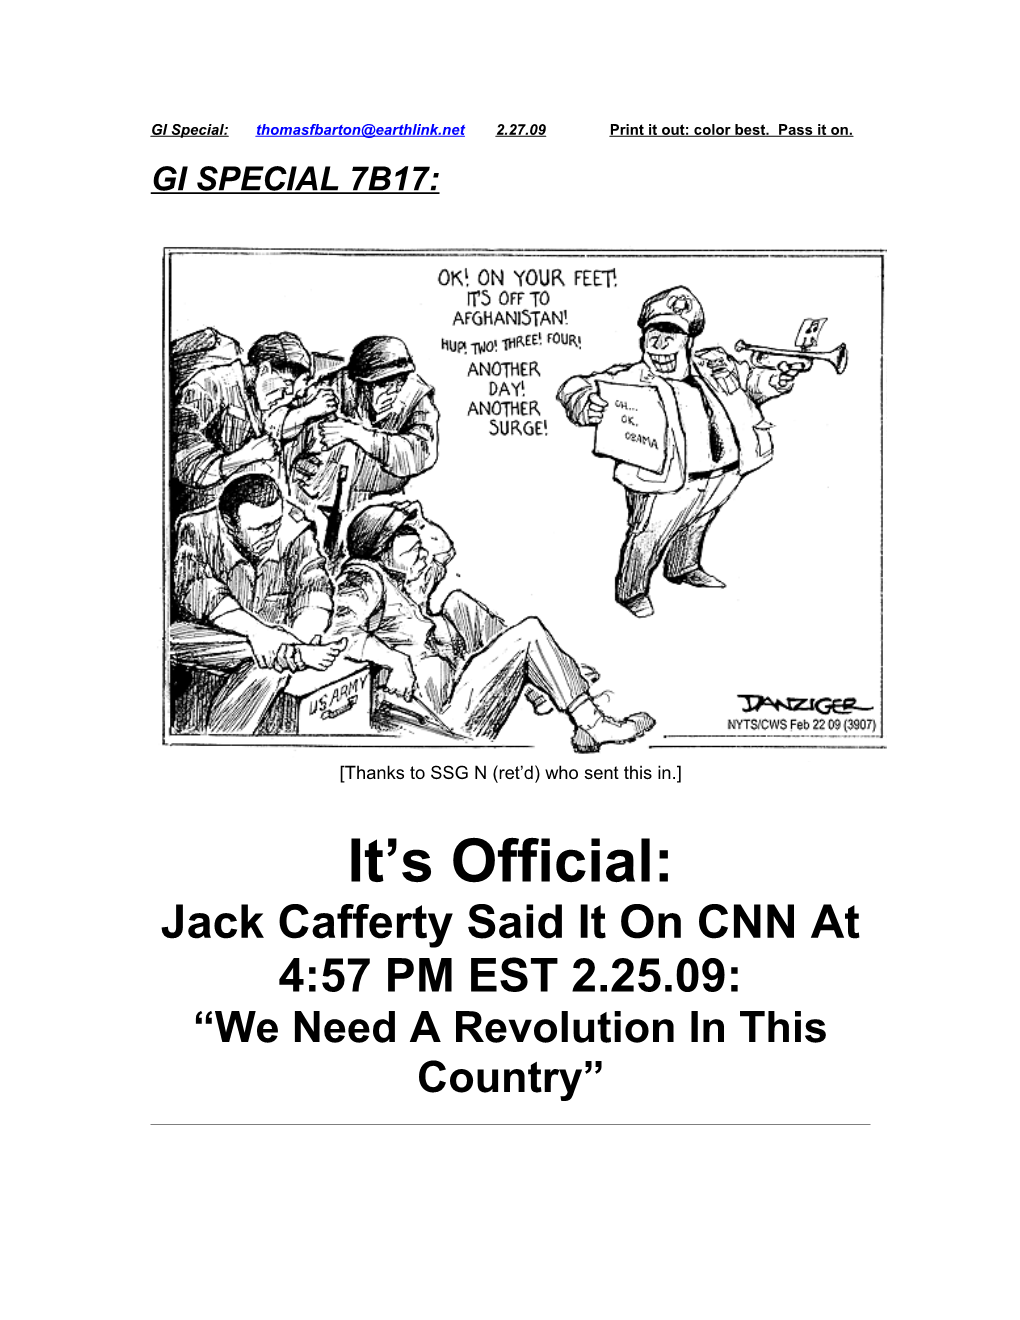 Jack Cafferty Said It on CNN at 4:57 PM EST 2.25.09